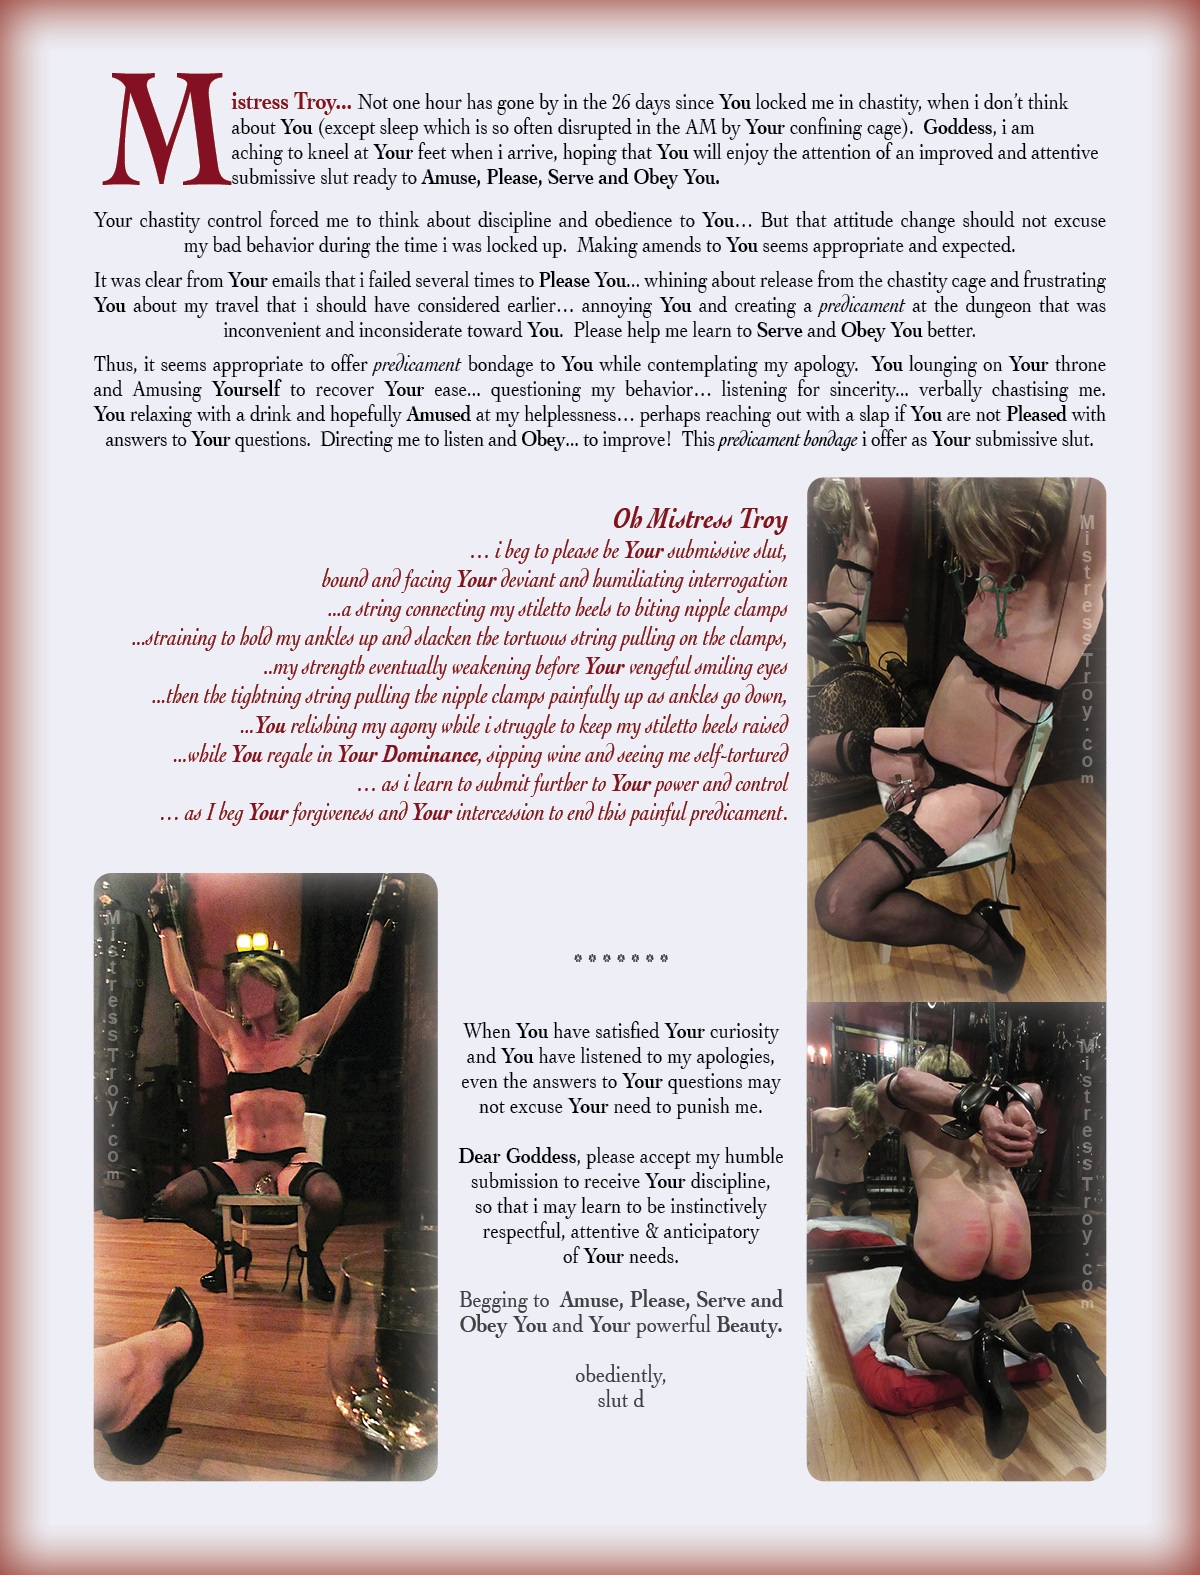 Mistress Troy Dominatrix NYC BDSM Story Plea and Apology from a slut photo